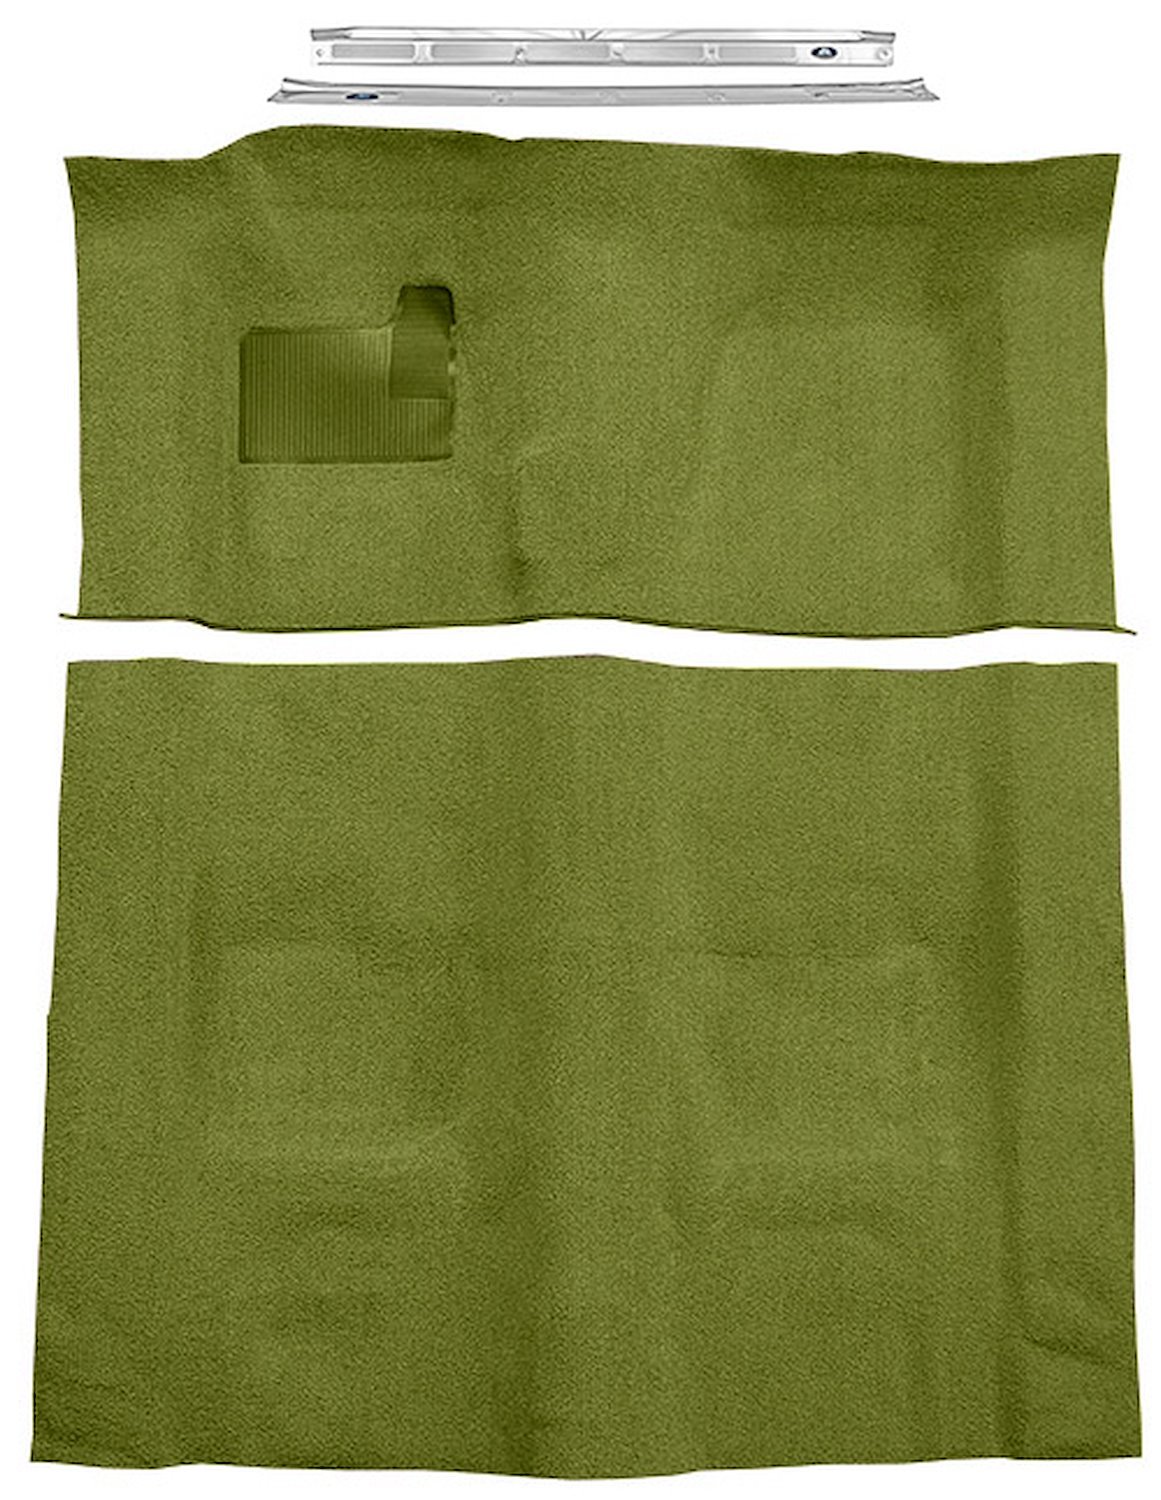 Moss Green Molded Cut Pile Carpet Kit w/Door Sill Plates for 1970-1973 Chevy Camaro, Pontiac Firebird [4-Speed Transmission]